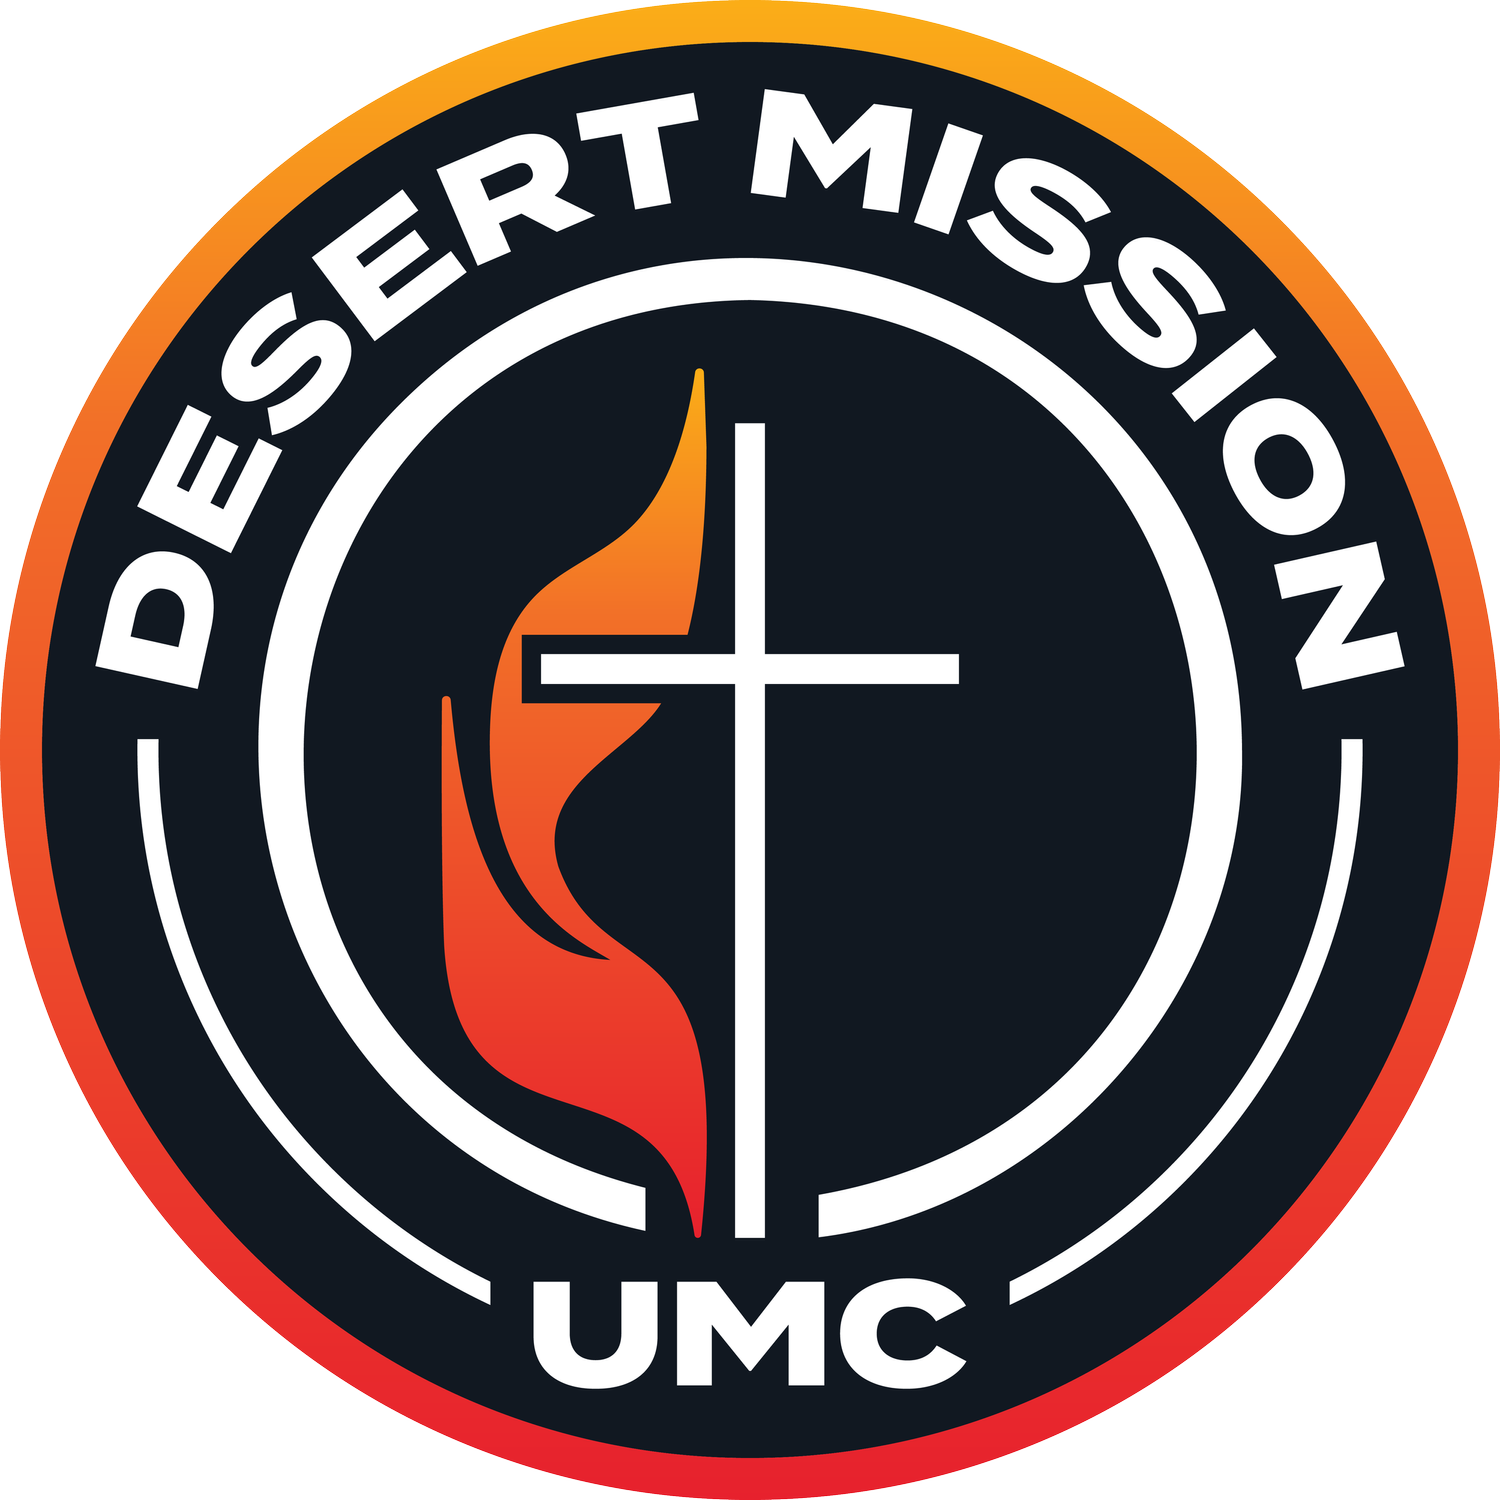 Desert Mission UMC